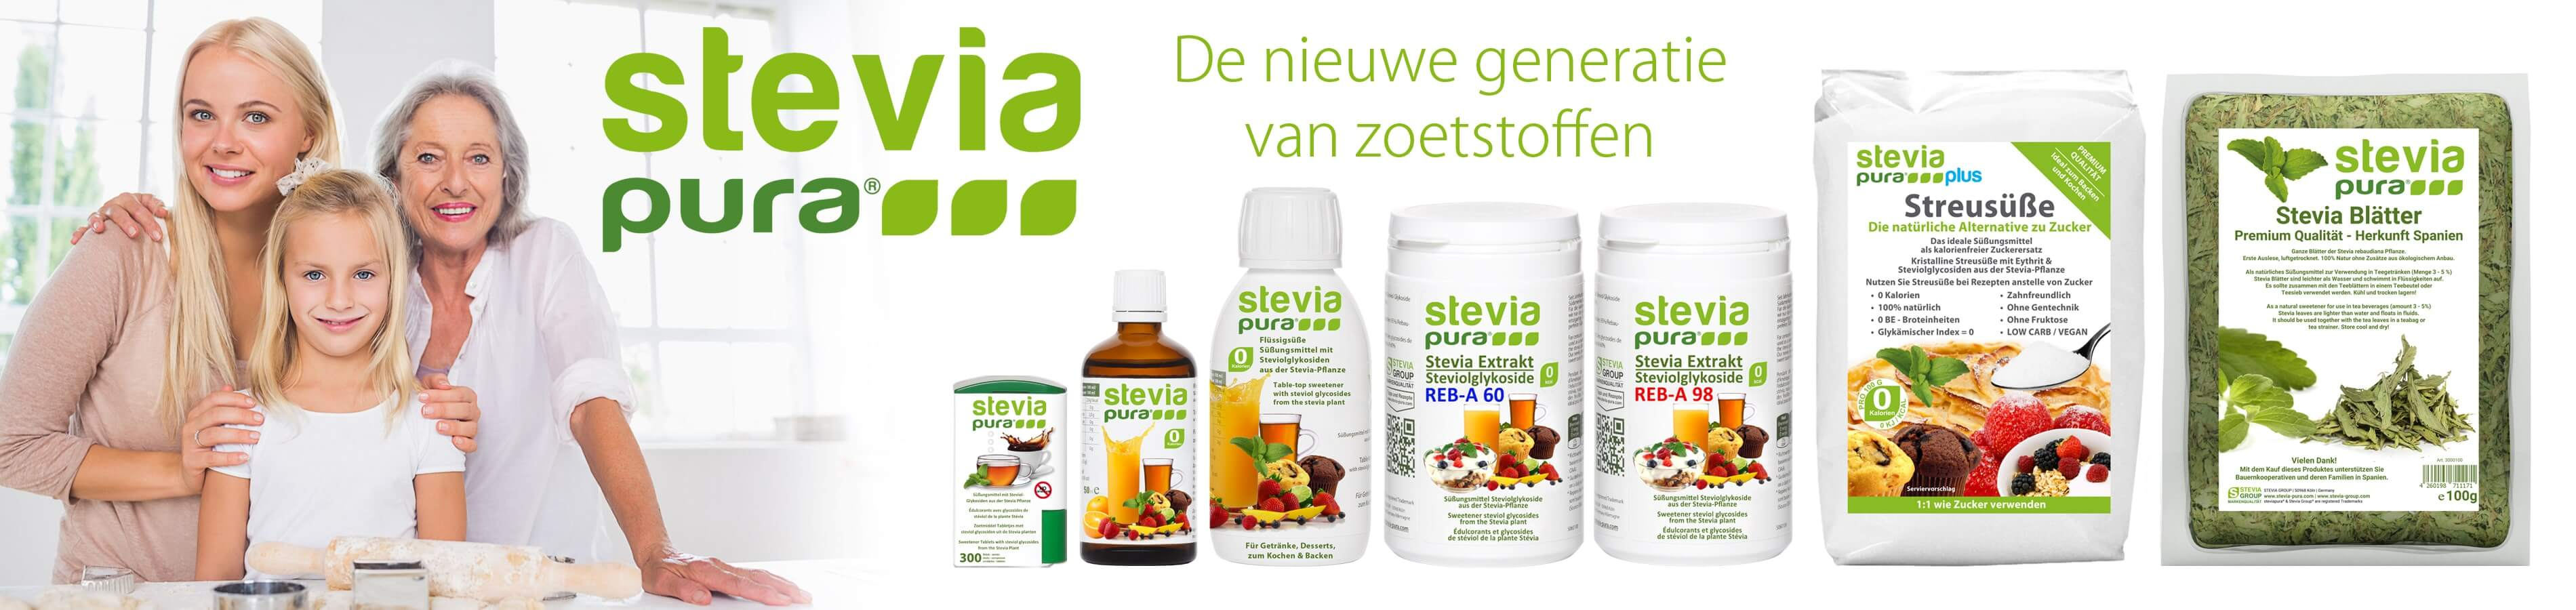 Stevia kopen | Hoog - kwaliteits suikersubstituut, Stevia en Erythritol producten | steviapura